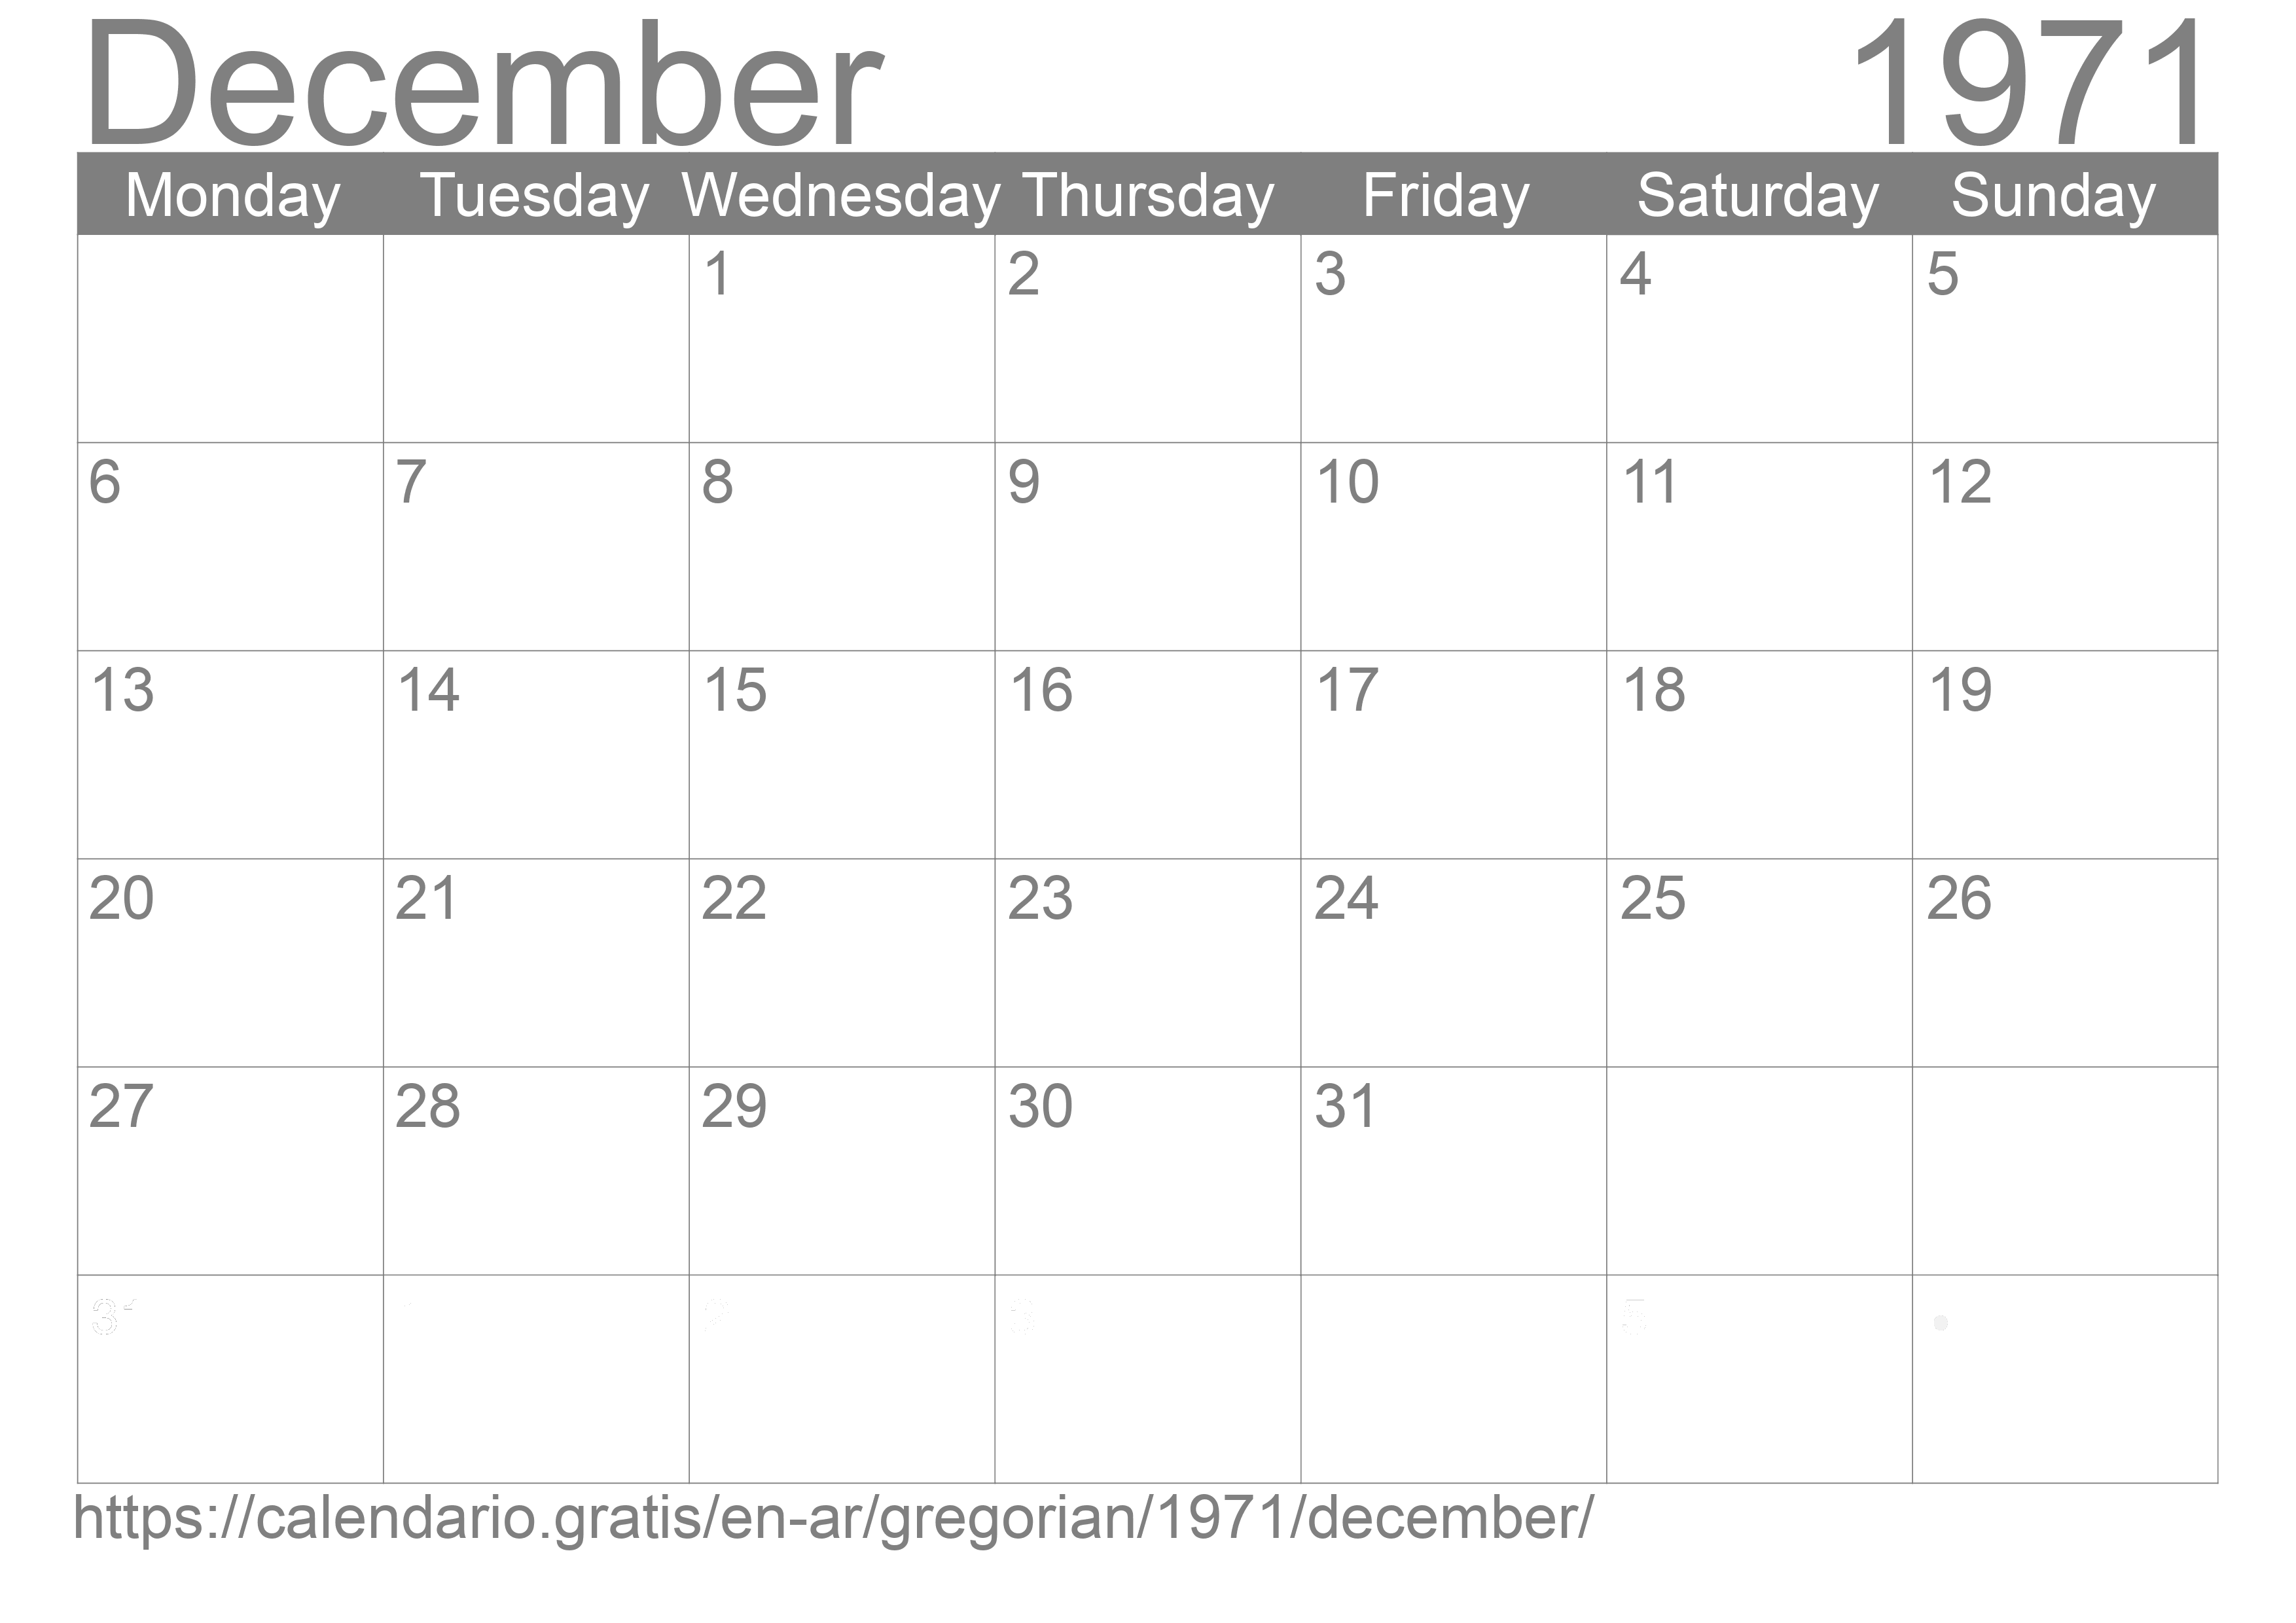 Calendar December 1971 to print